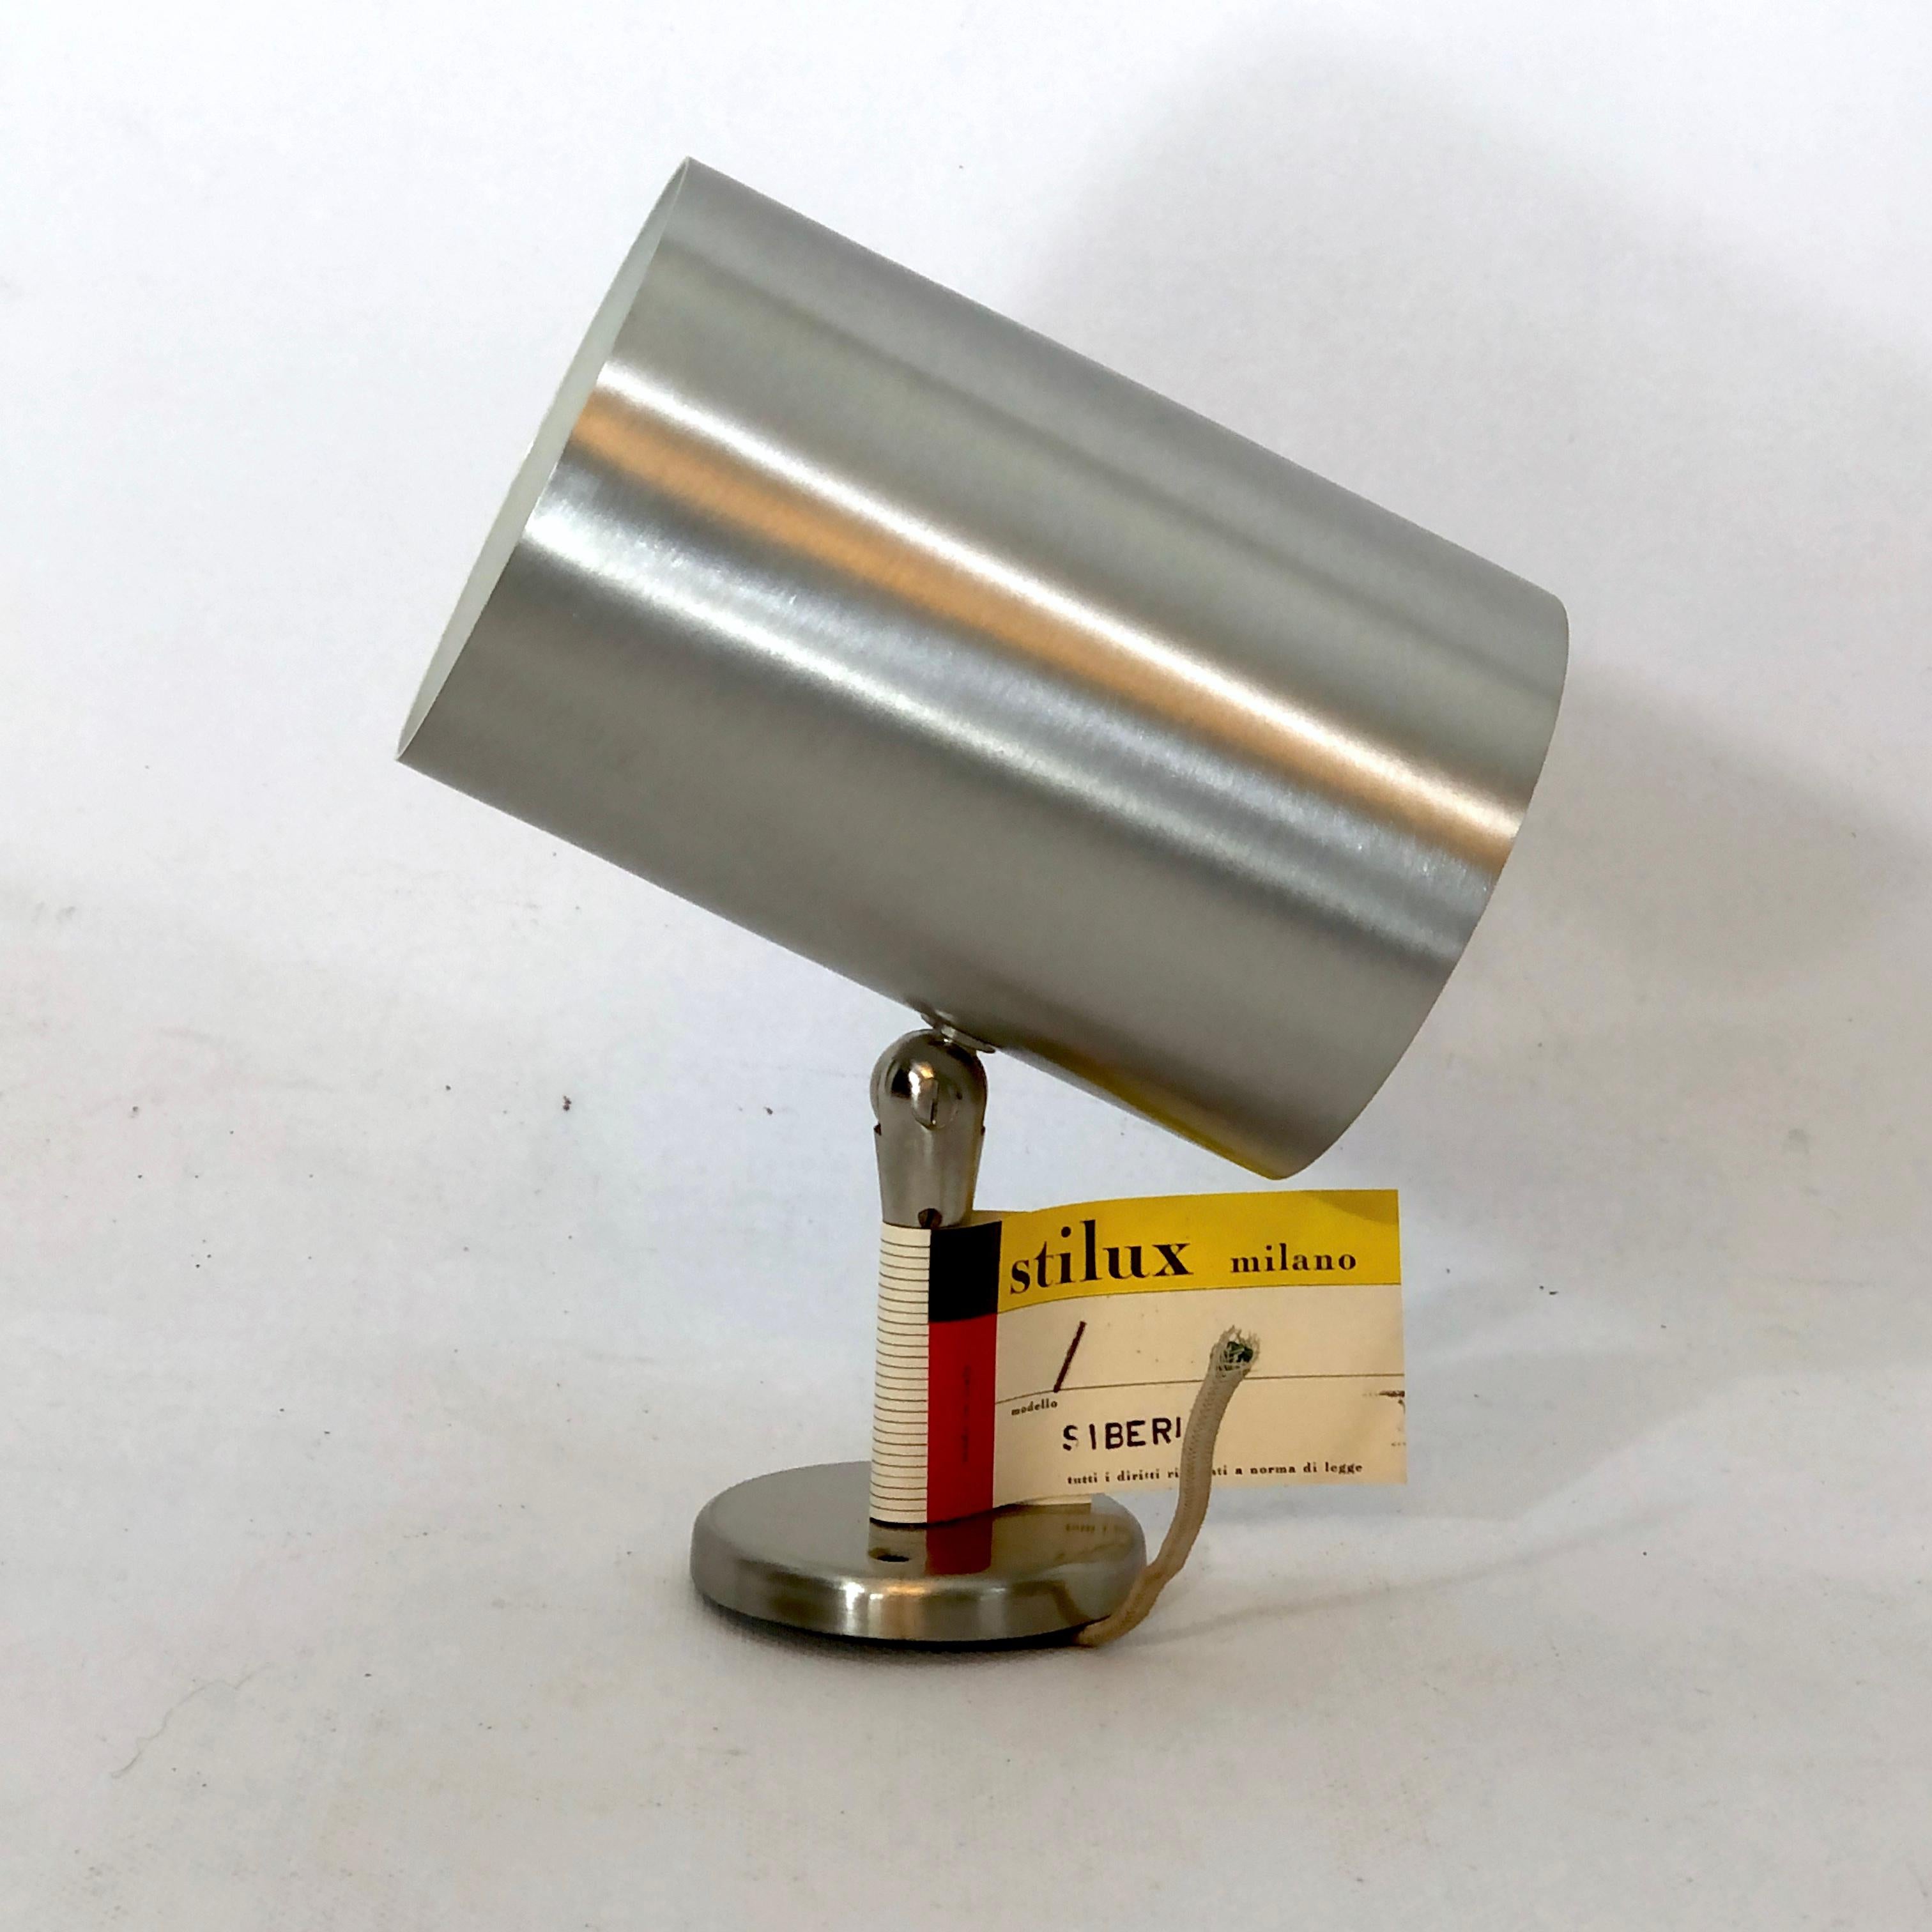 Stilux Milano, Stock Fund Wall Lamp Model Siberia, 1960s For Sale 2